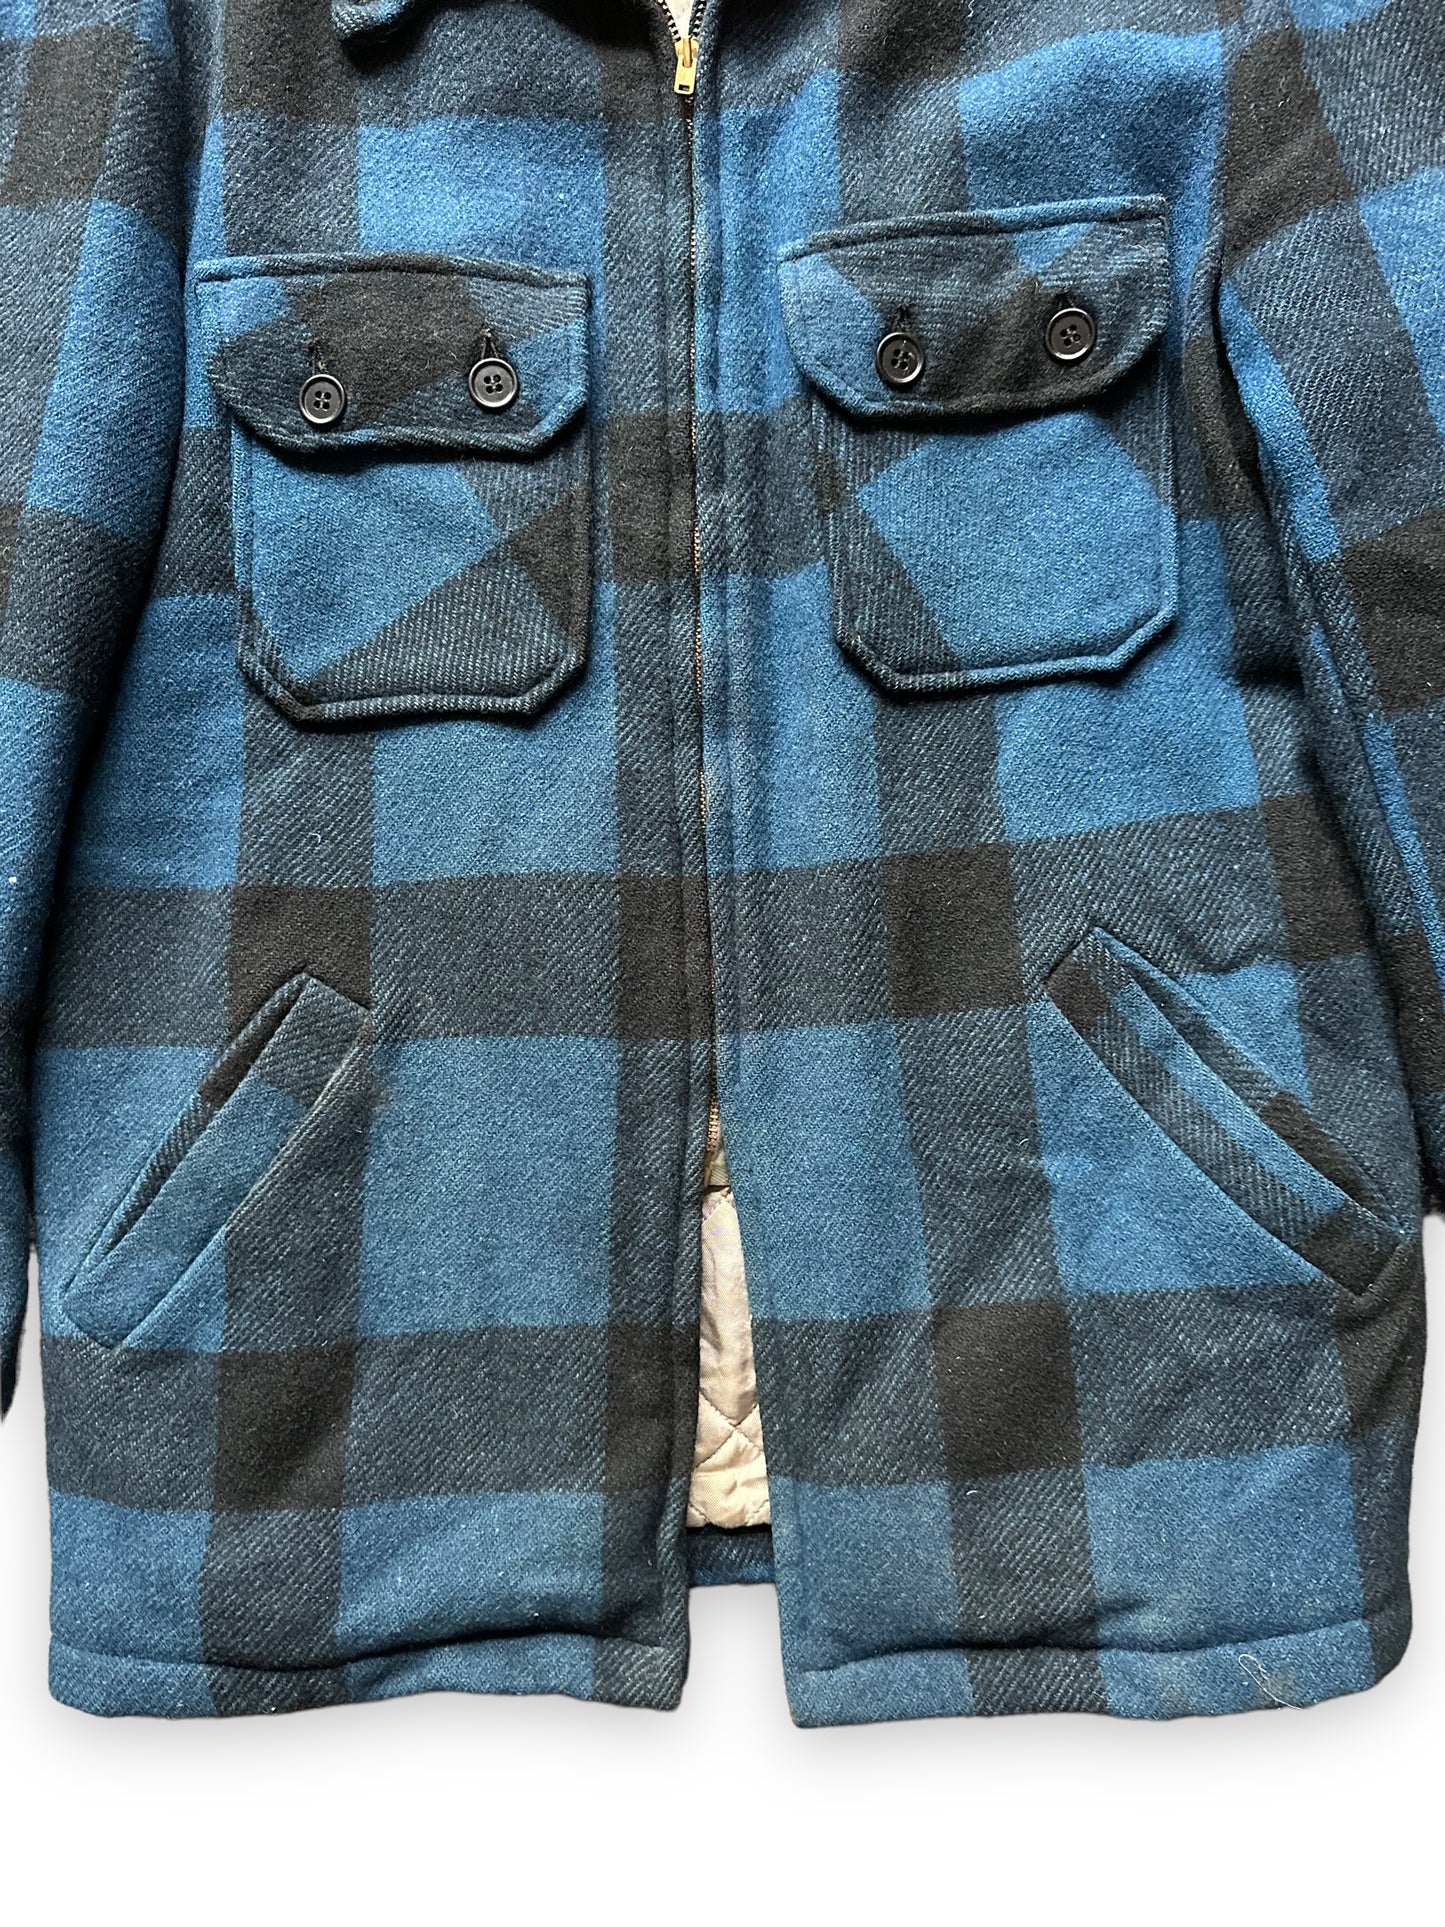 Lower Front View of Vintage Black Bear Cobalt Blue and Black Wool Coat SZ L  |  Vintage Workwear Seattle | Barn Owl Vintage Seattle